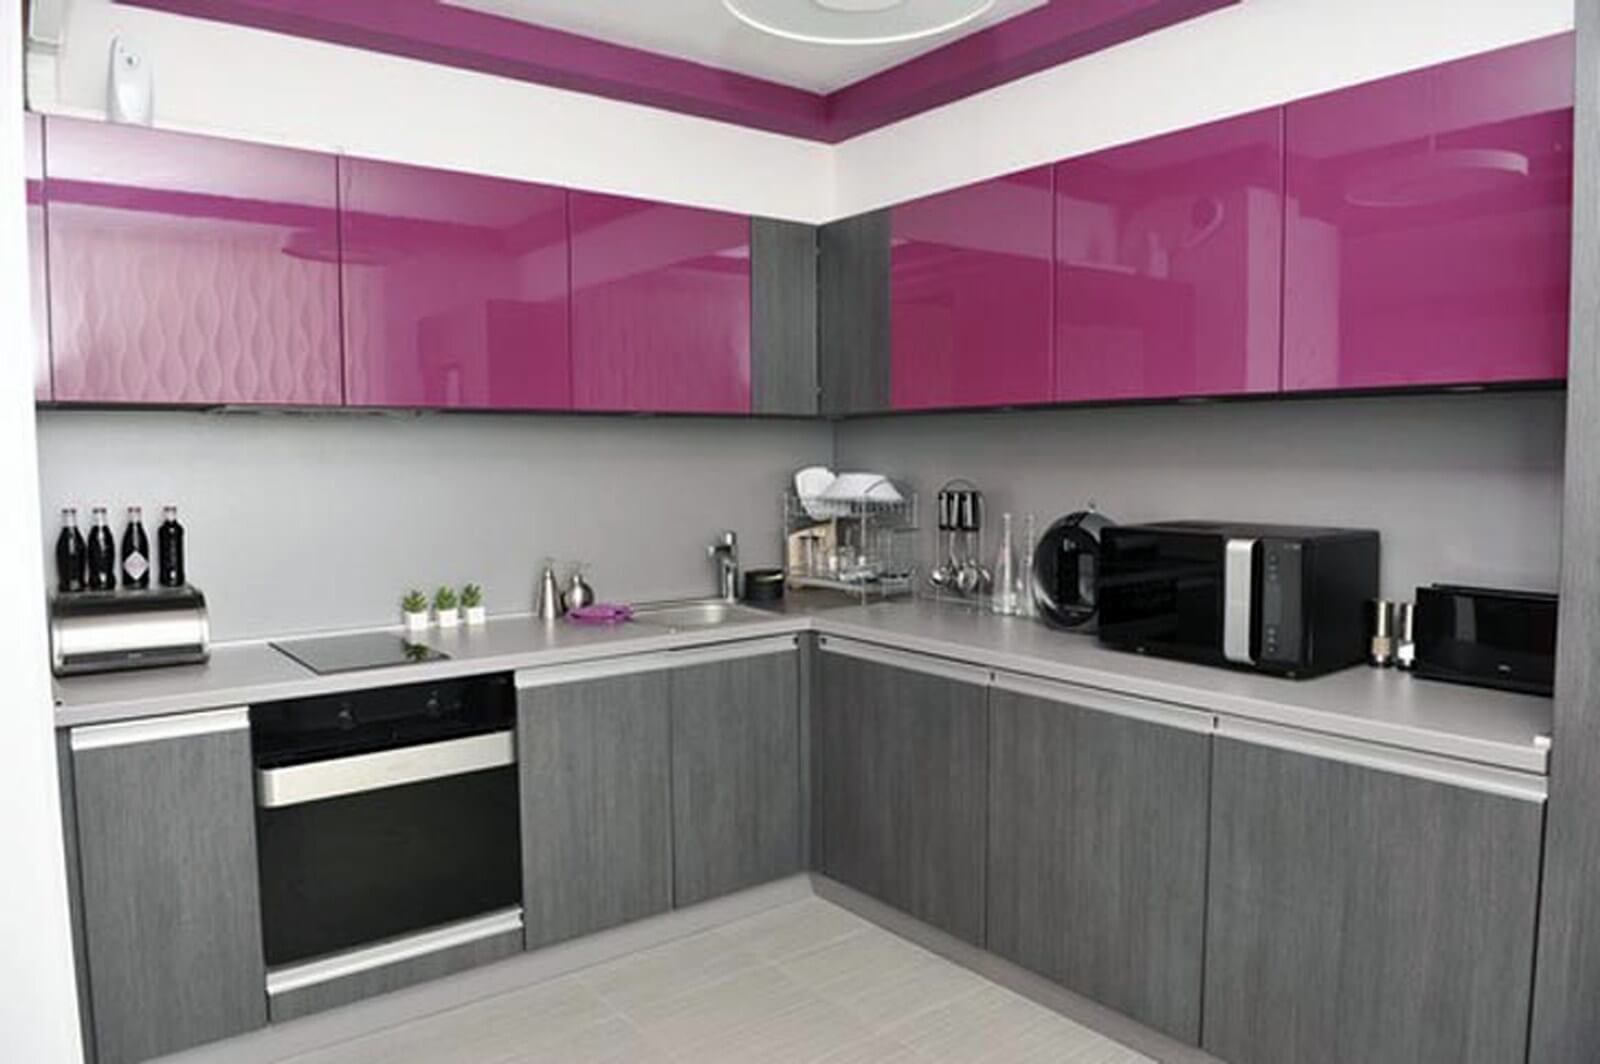 Creative two-tone kitchen cabinet